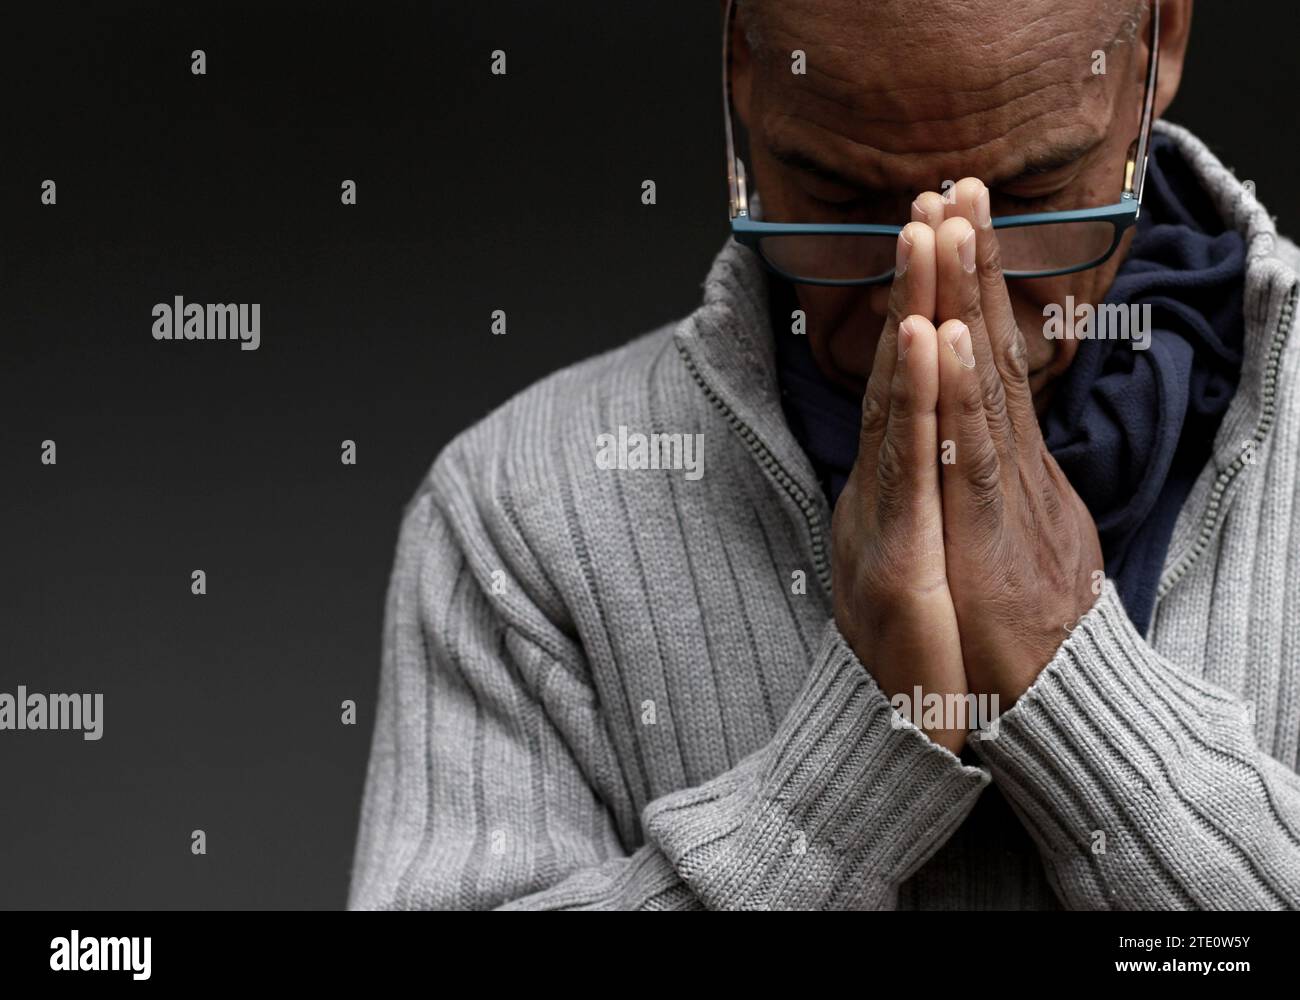 praying to god with people stock image stock photo Stock Photo